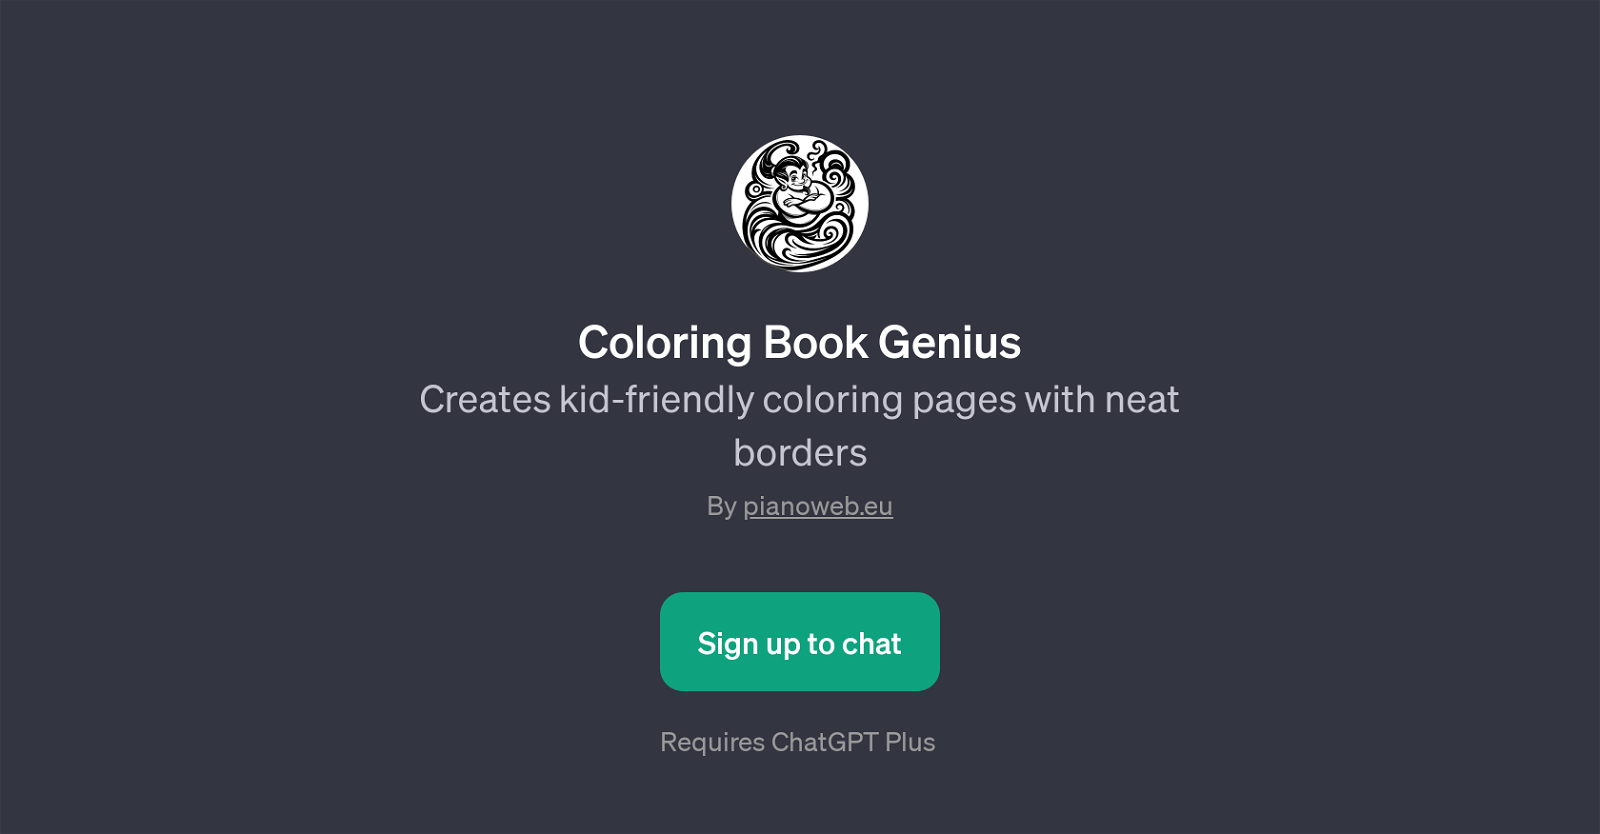 Coloring Book Genius website